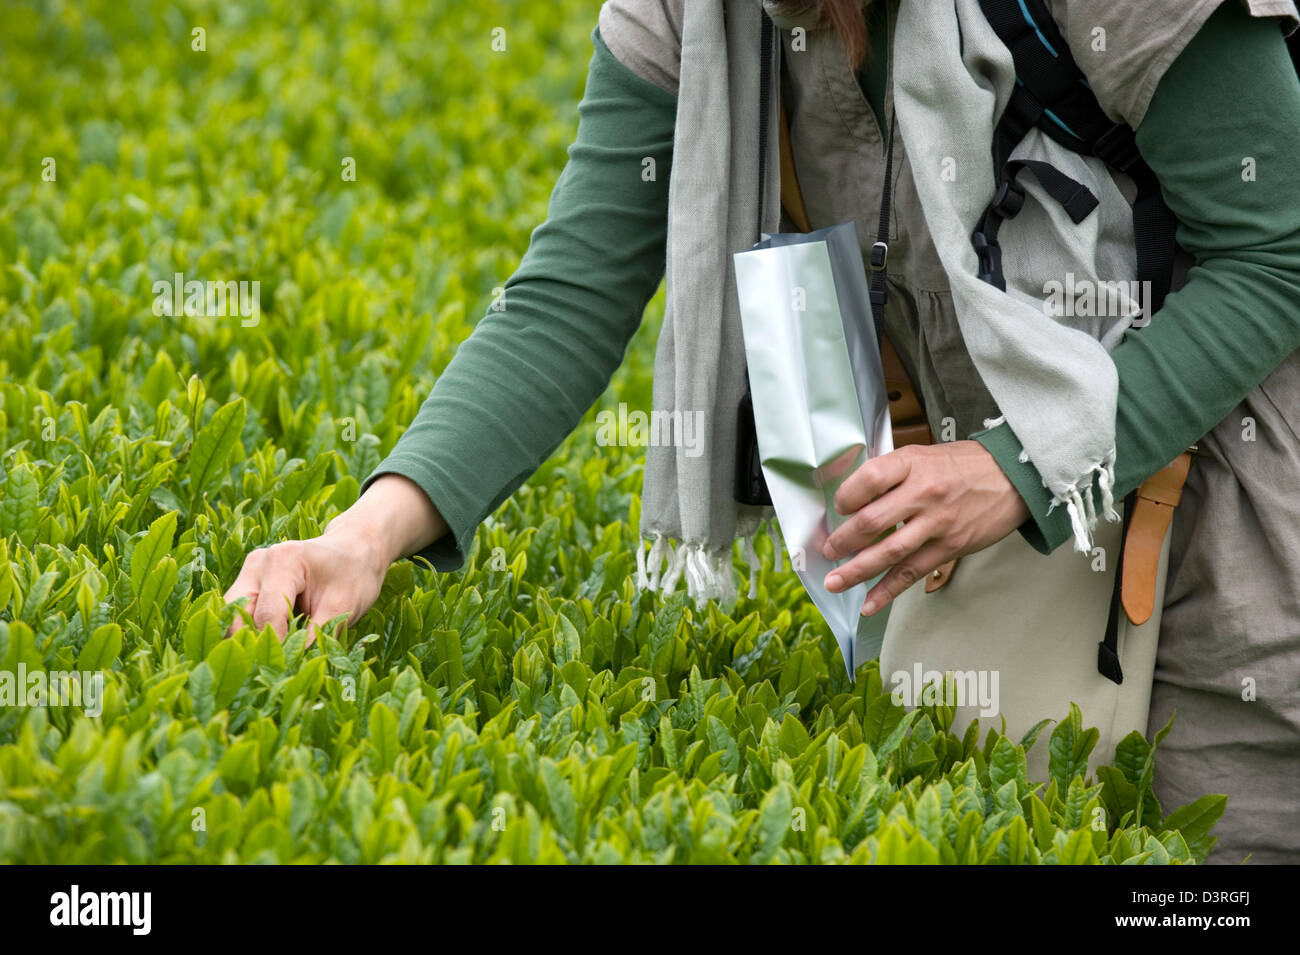 Visitors to Makinohara chabatake tea fields in Shizuoka, Japan picking their own shincha green tea leaves as souvenirs. Stock Photo